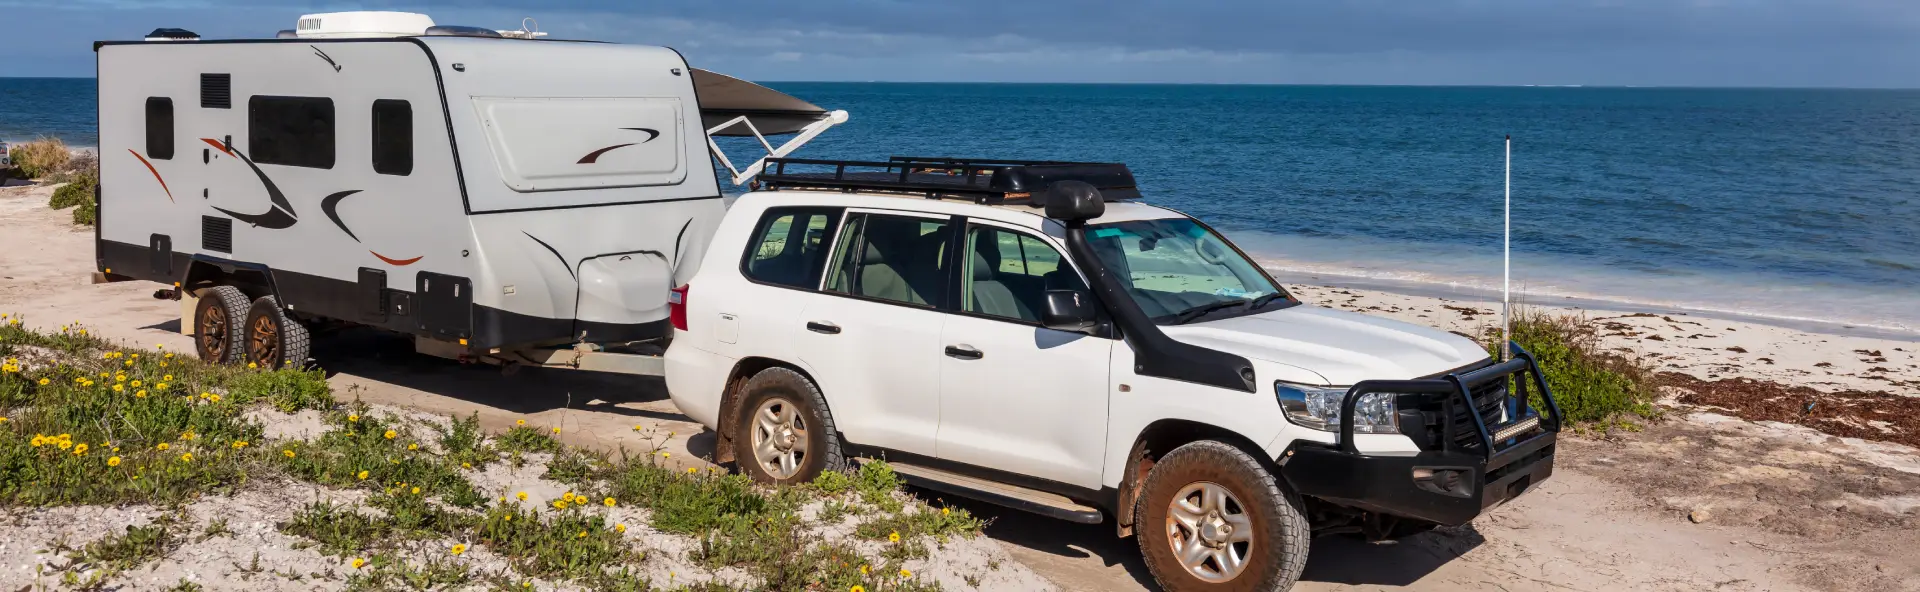 Four wheel drive towing caravan on white sandy beach